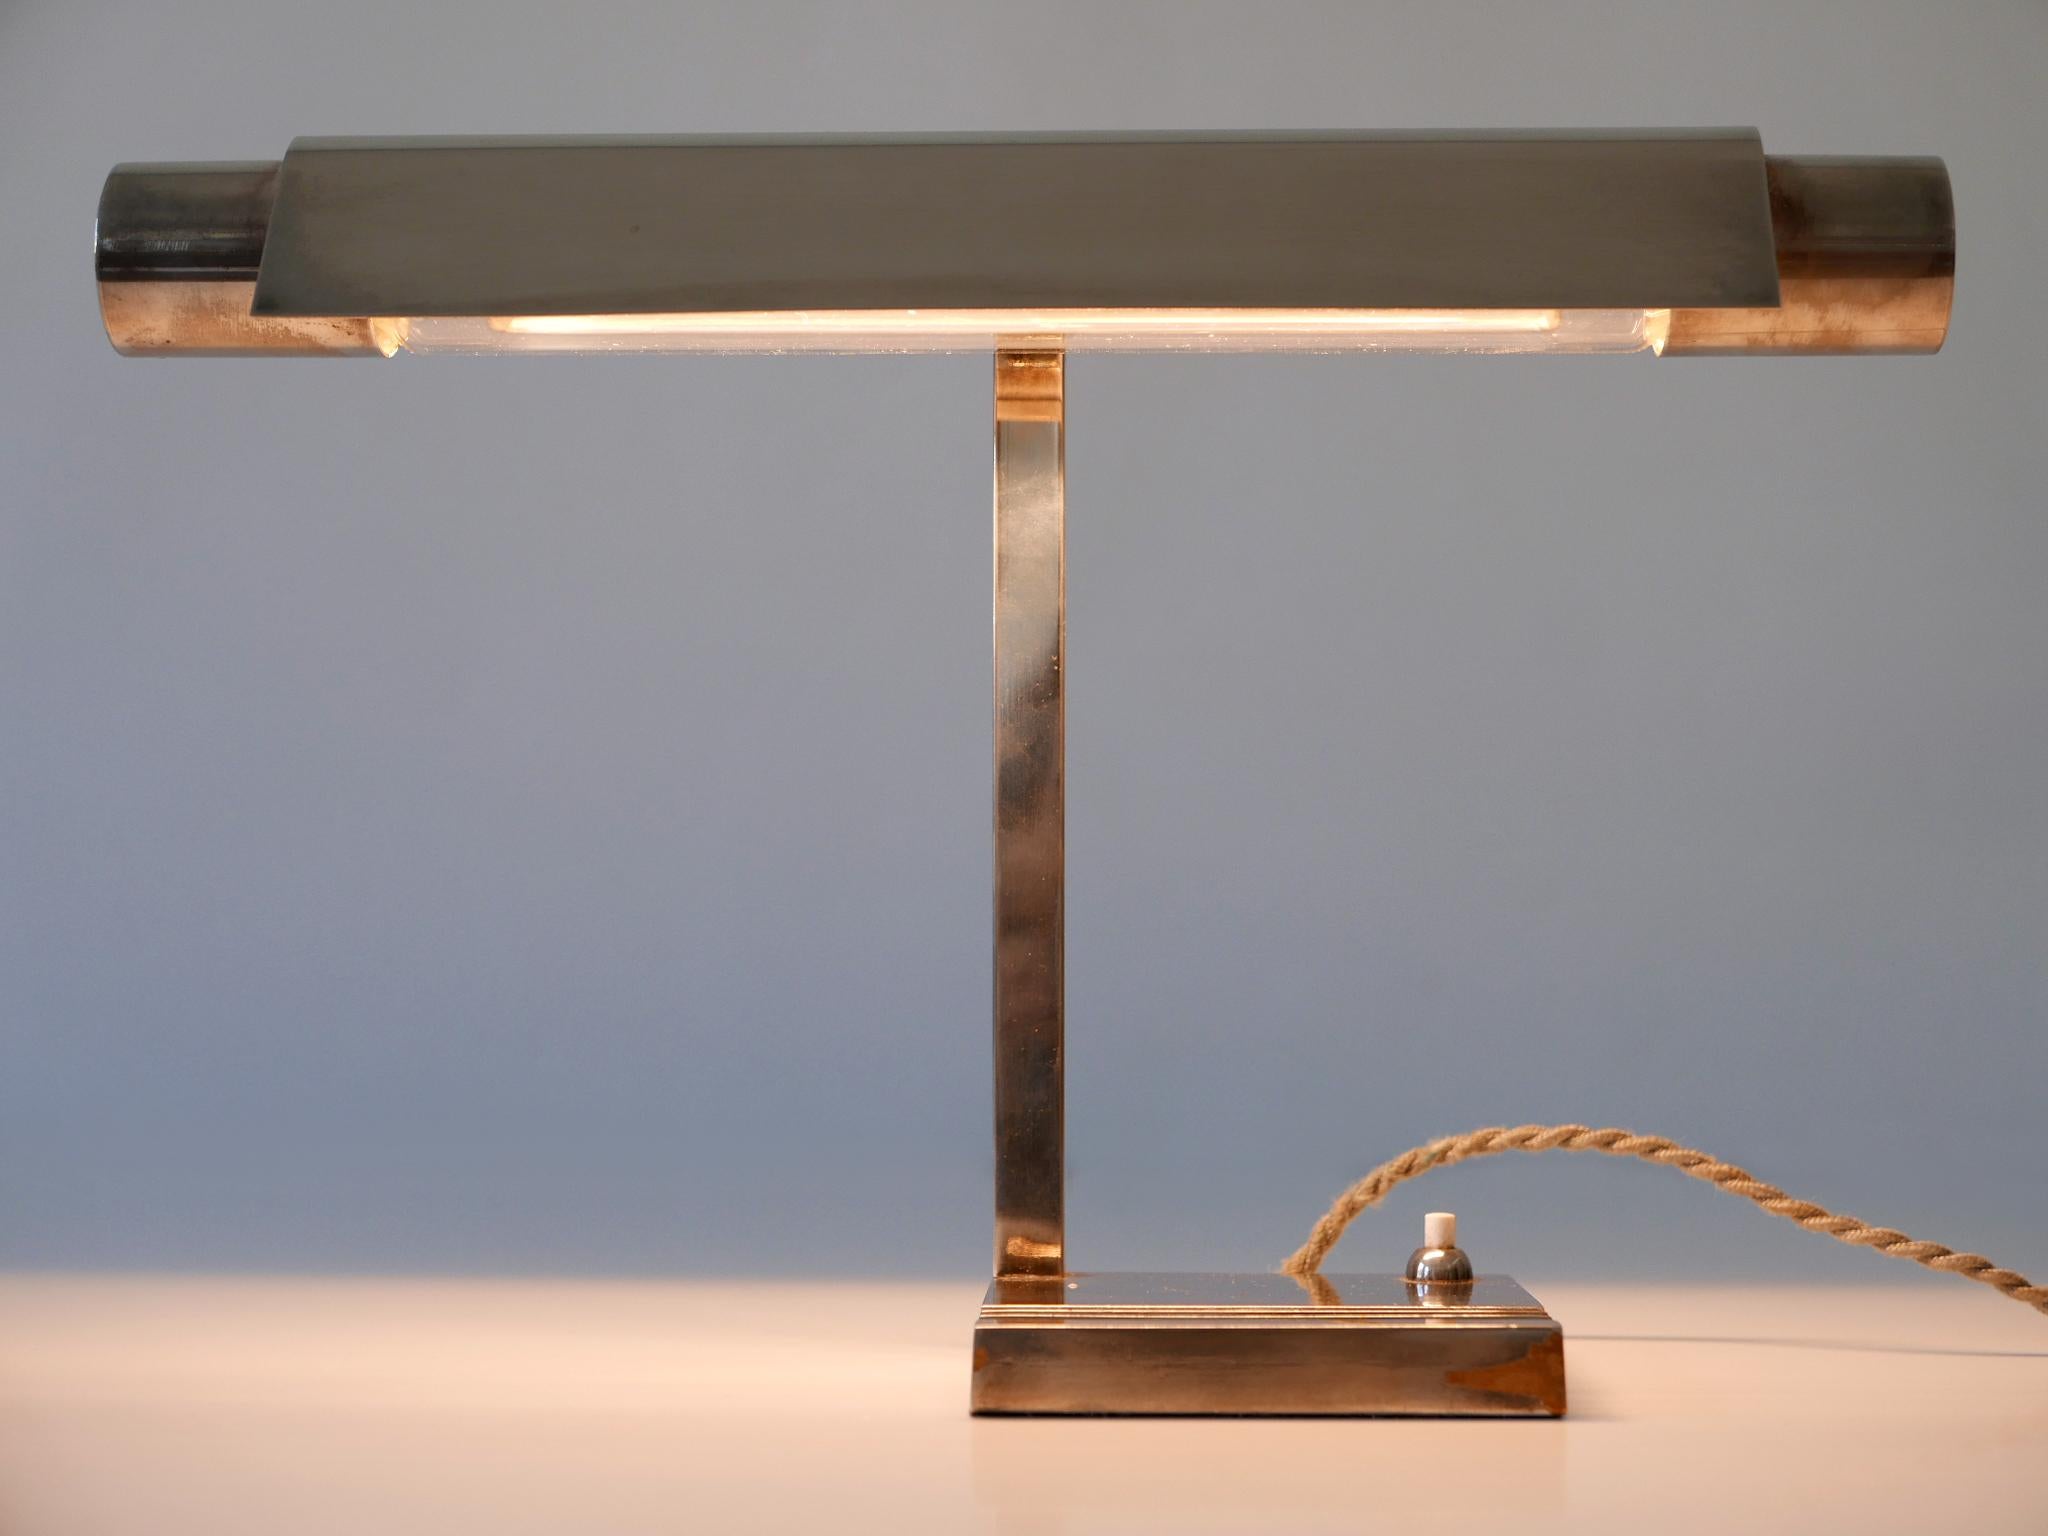 Adjustable Neolux Desk Lamp by Louis Dernier & Hamlyn Limited England 1930s For Sale 2